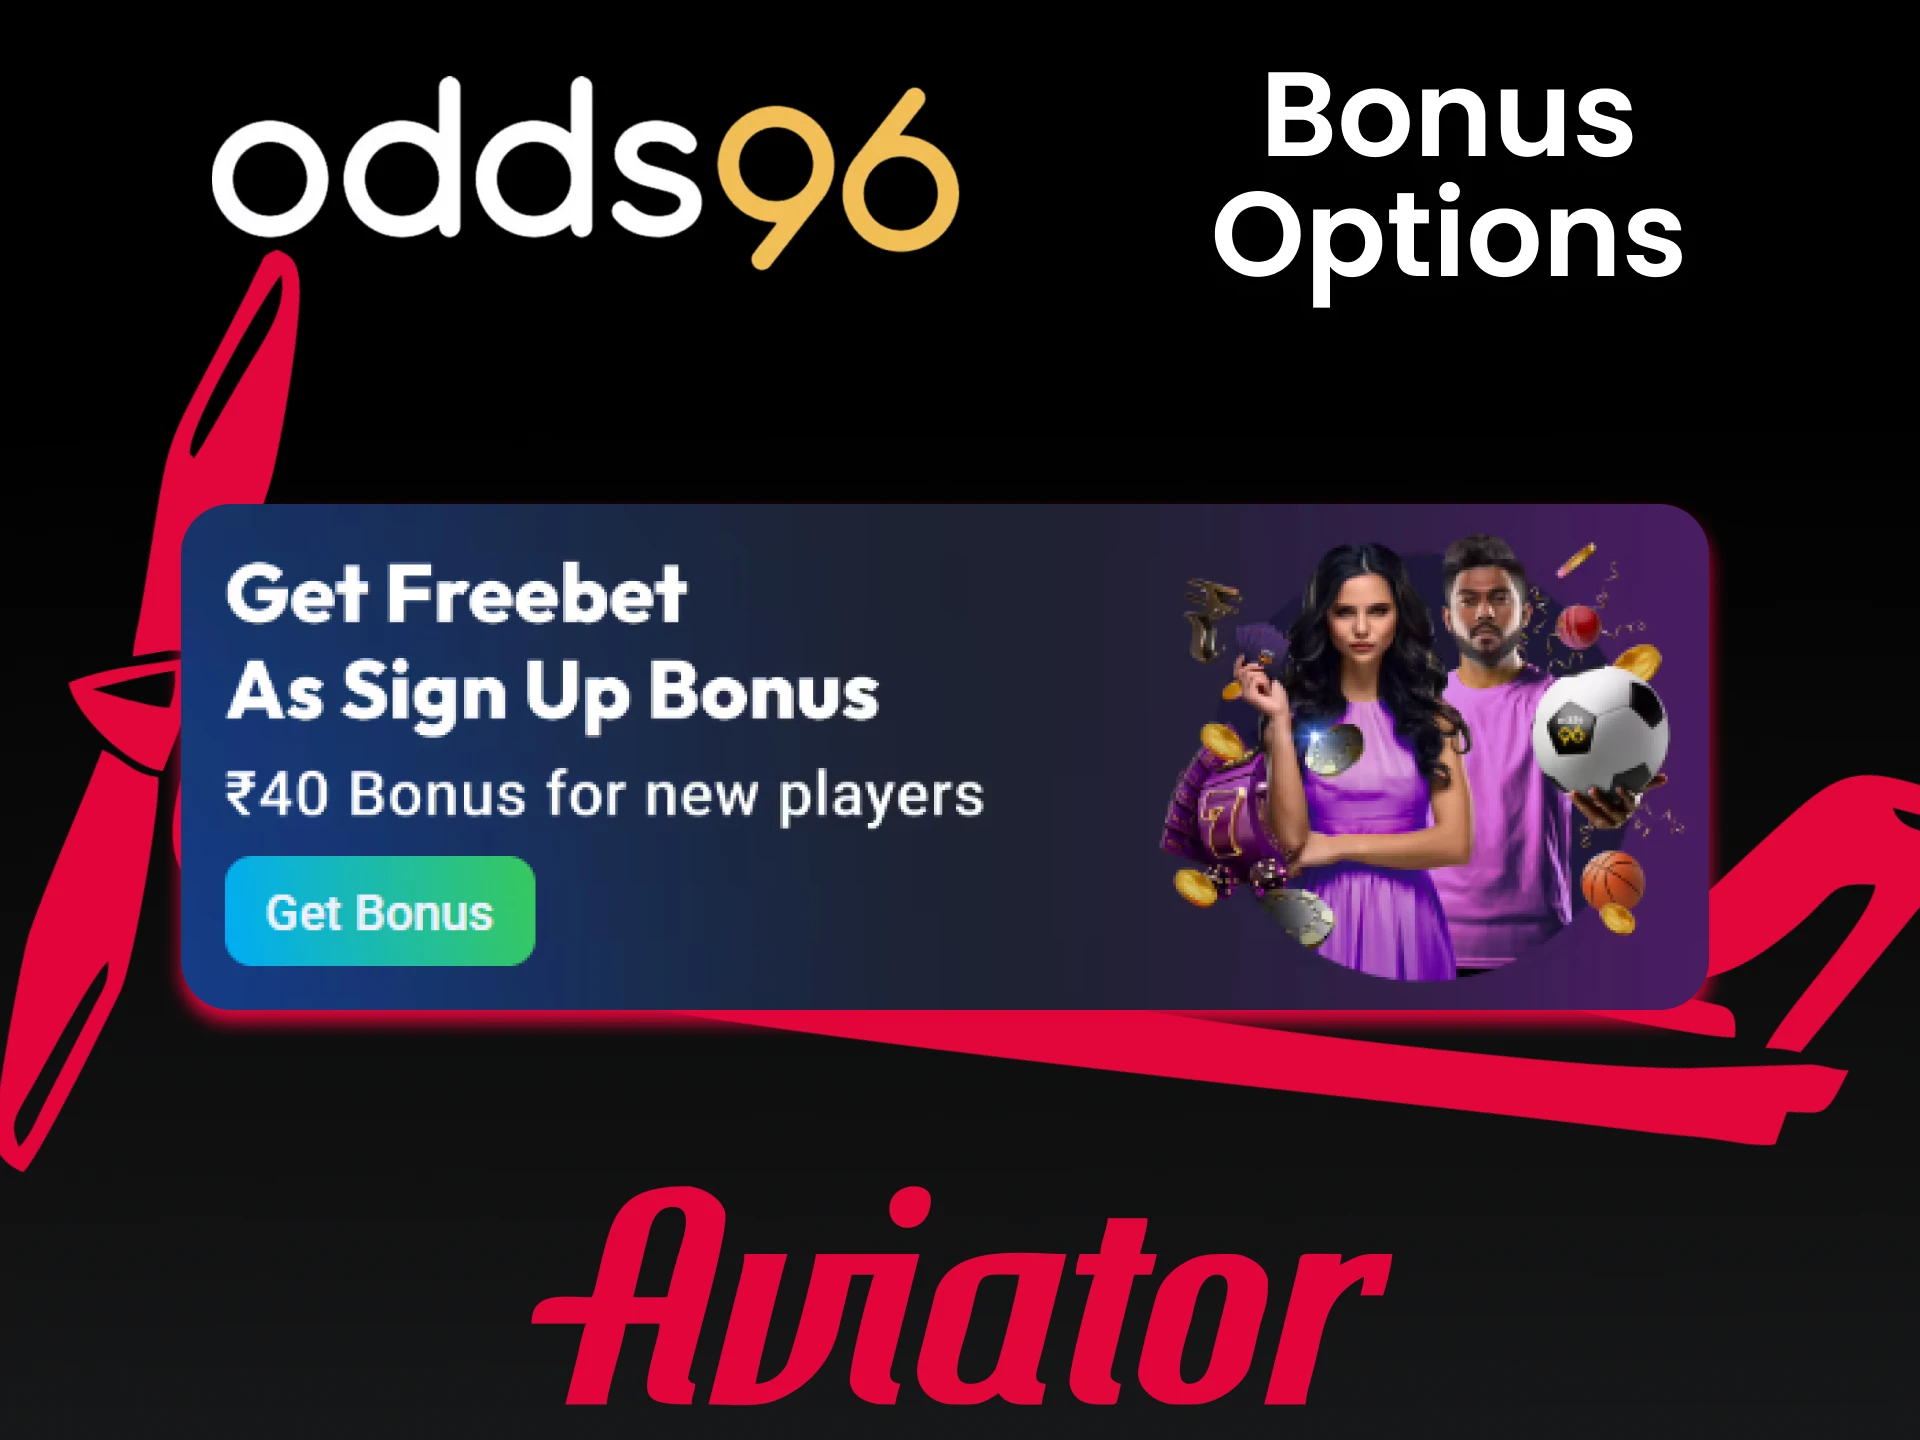 Get Aviator Bonus from odds96.